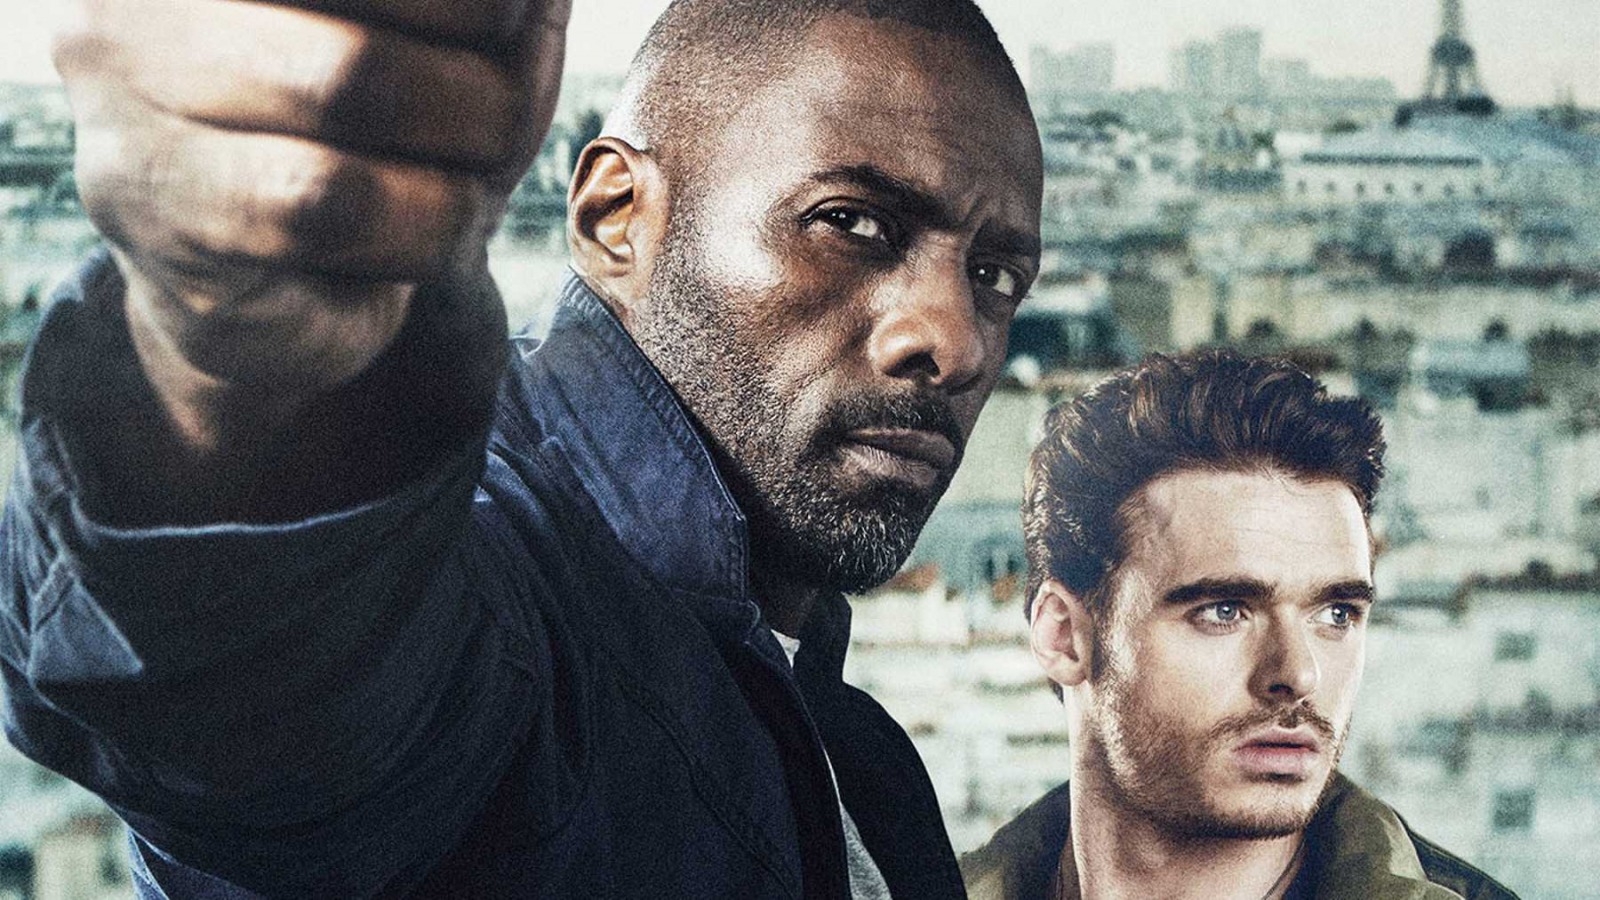 This Idris Elba Film Just Cracked The Netflix Top Ten